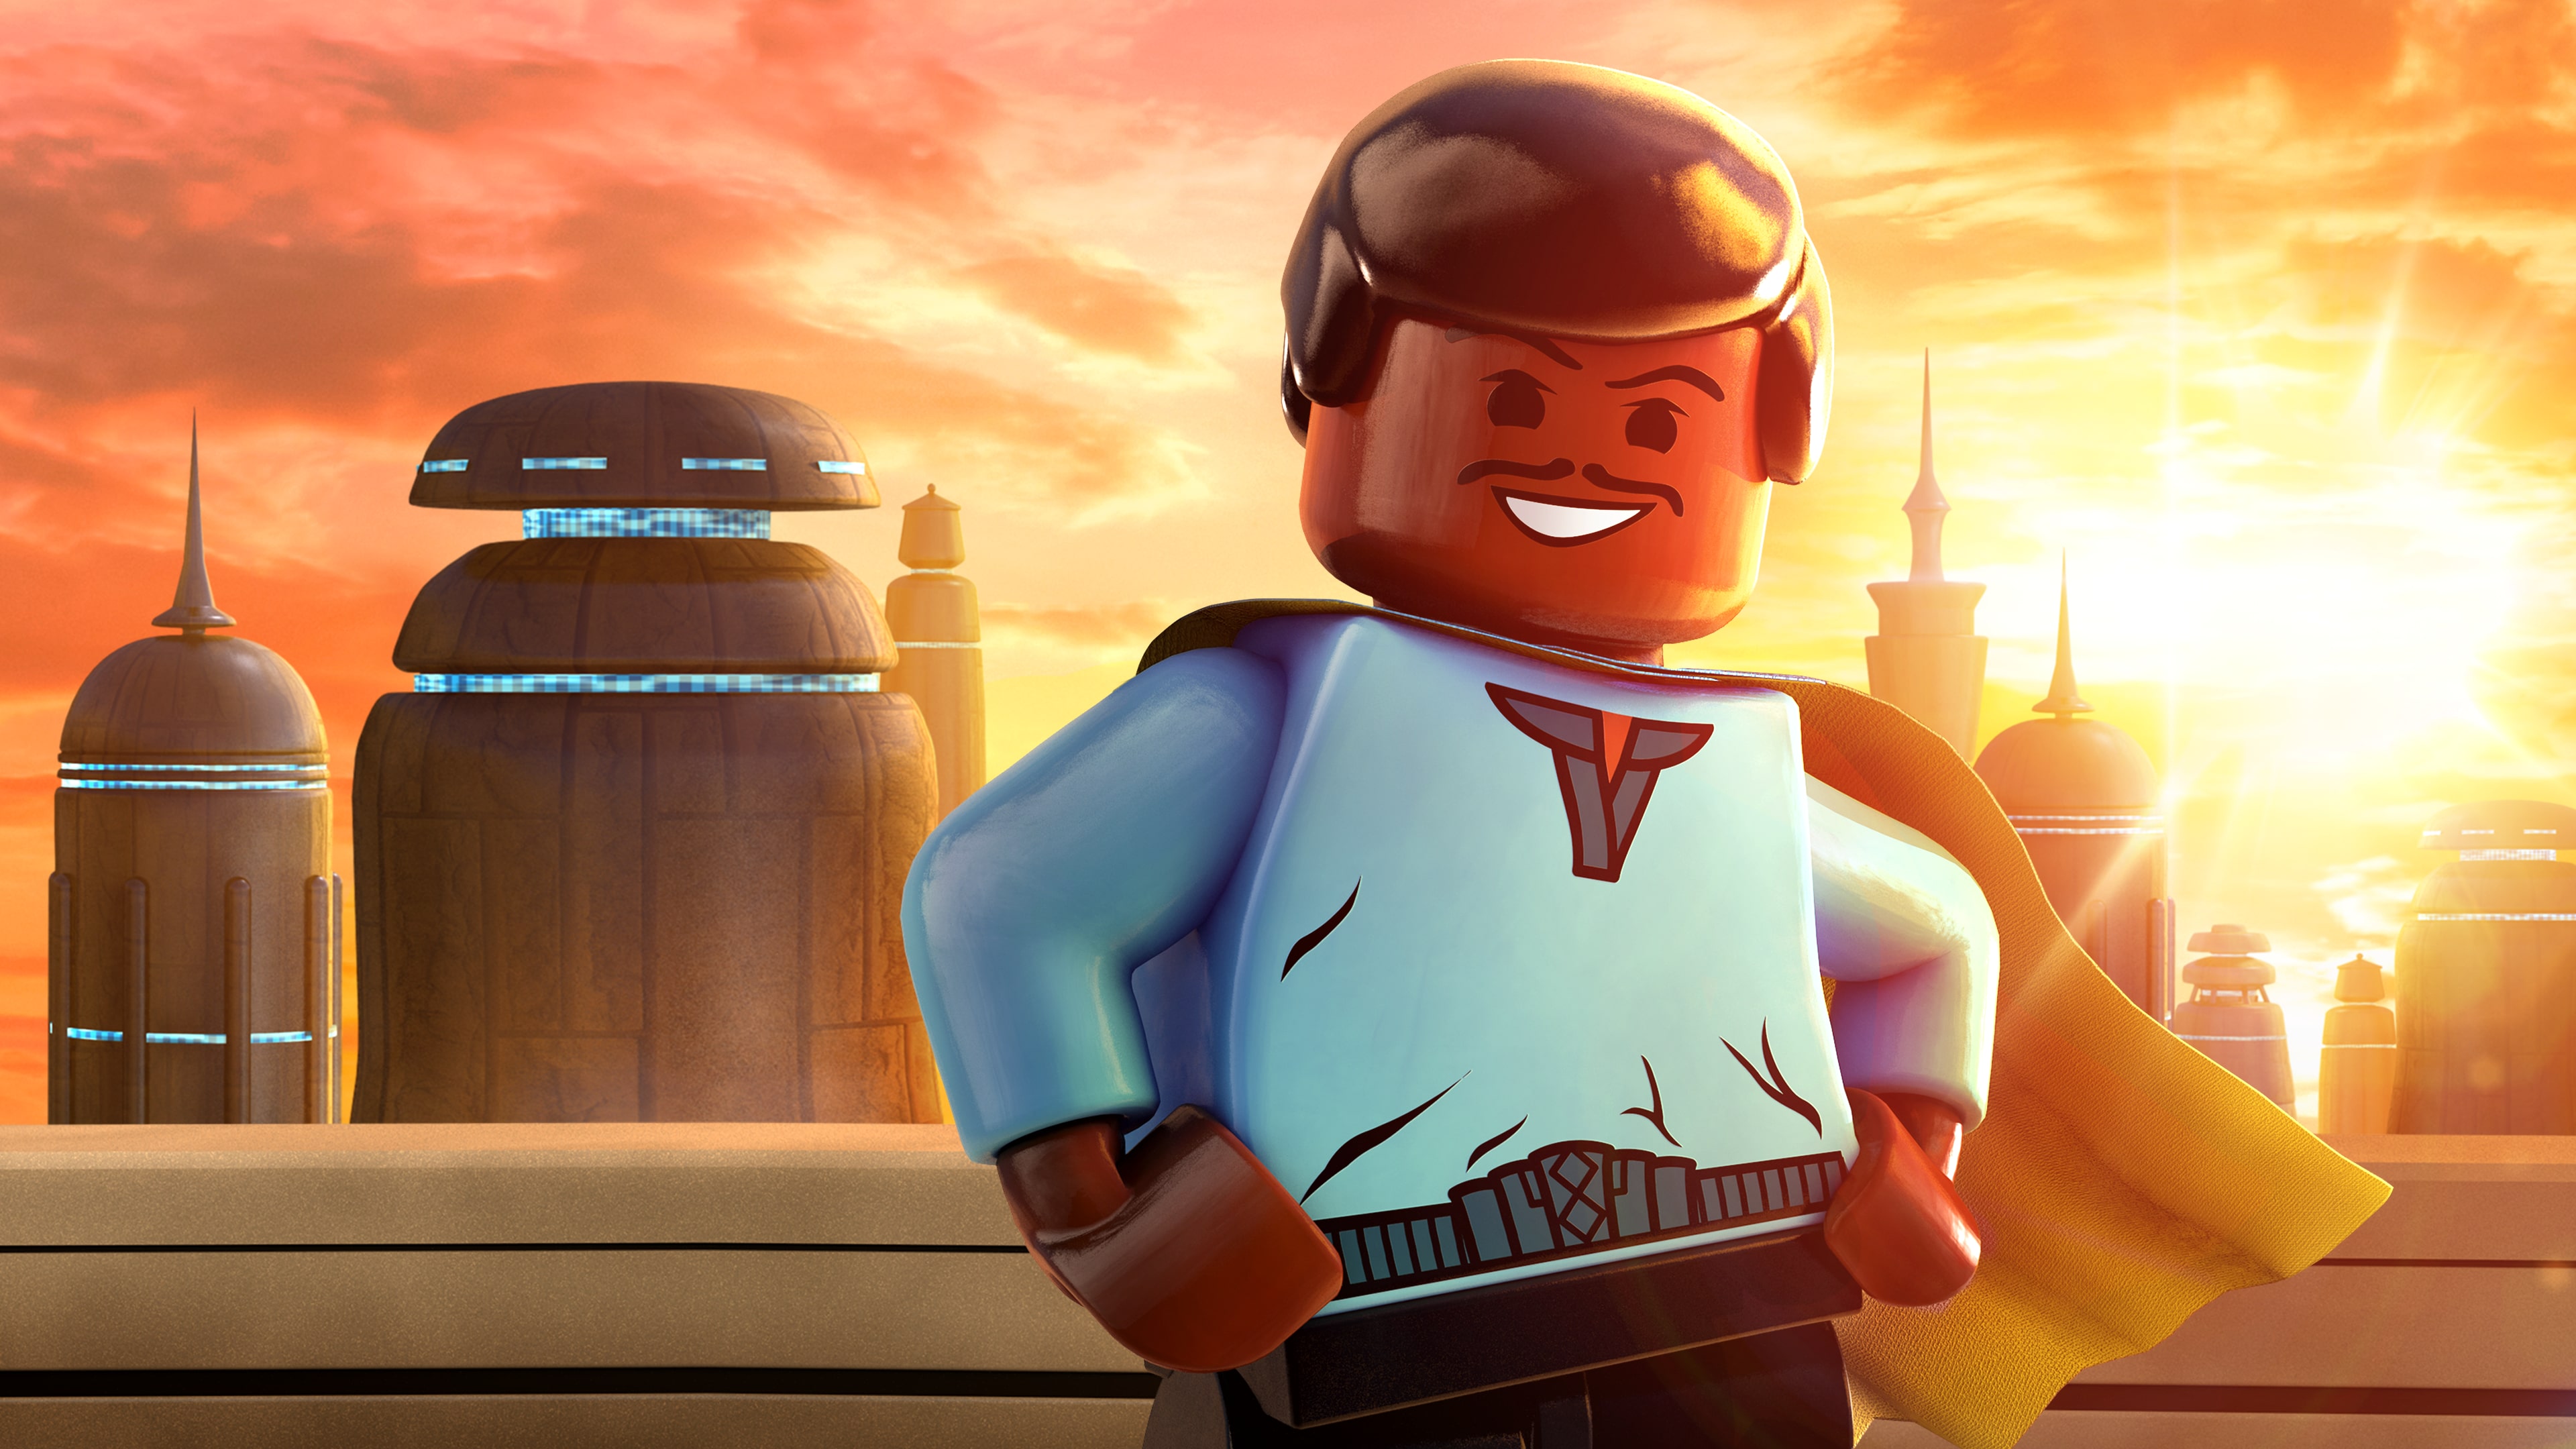 LEGO® Star Wars™: The Skywalker Saga Classic Character Pack